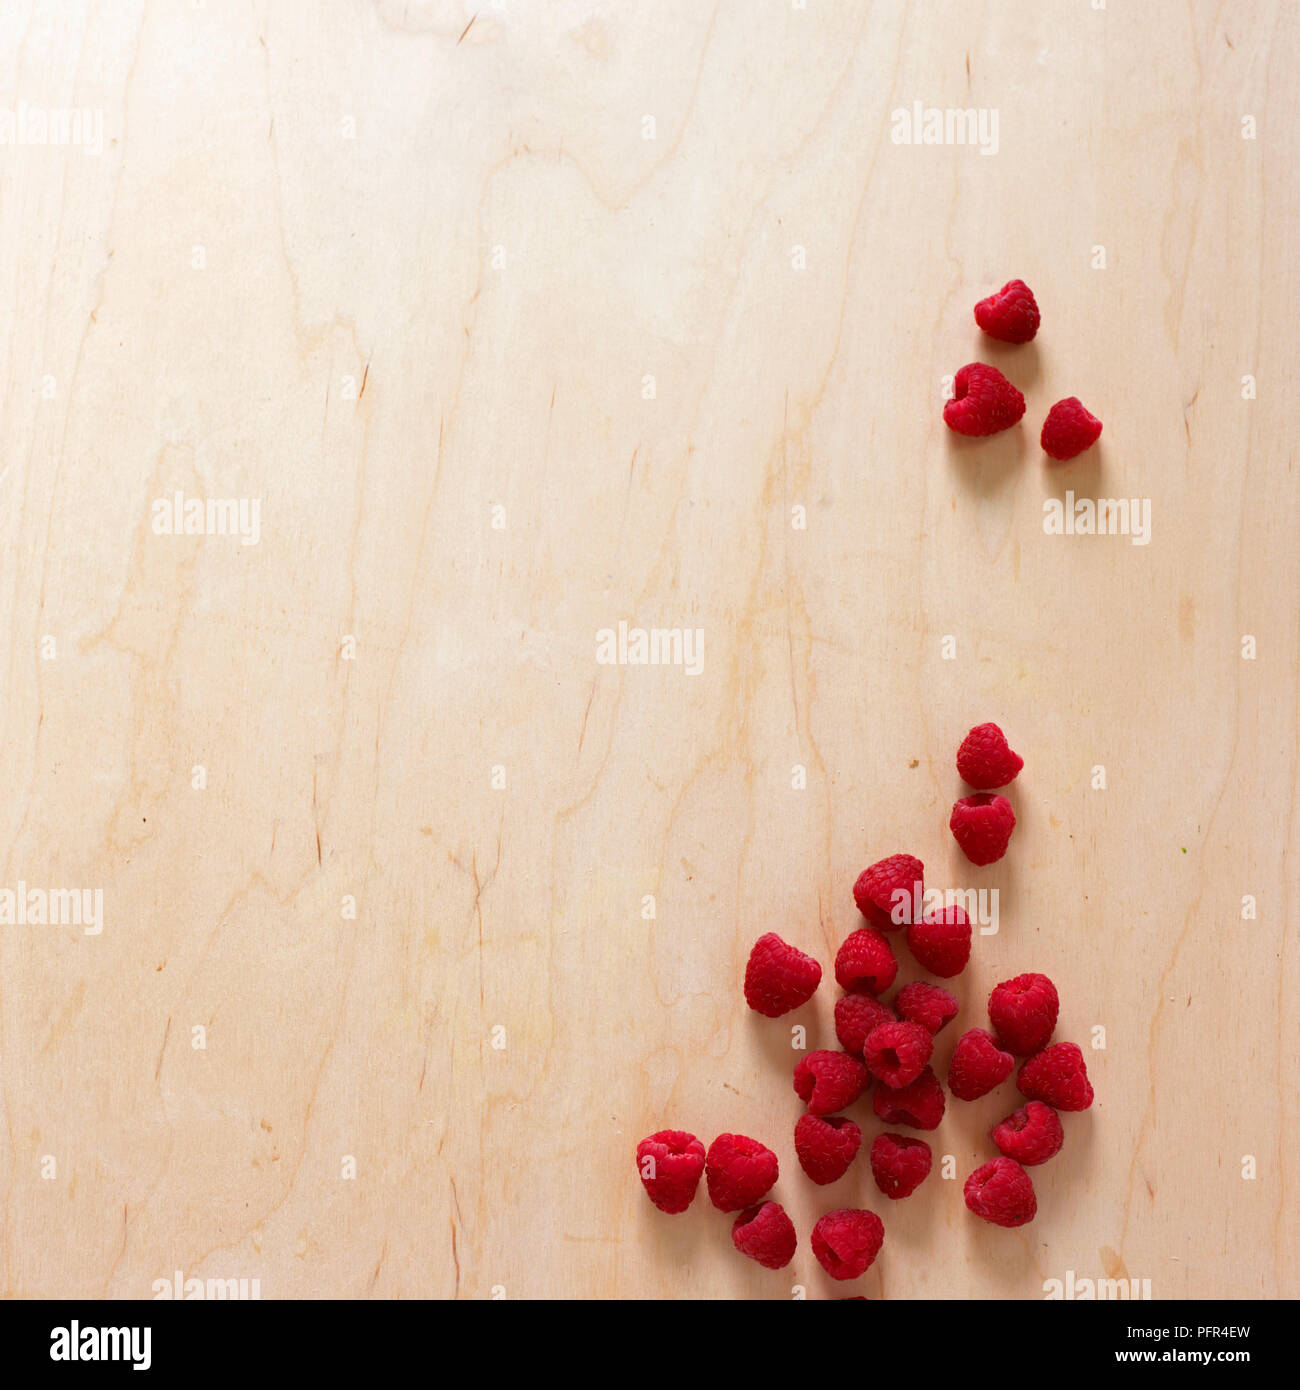 Fresh raspberries on wooden surface Stock Photo